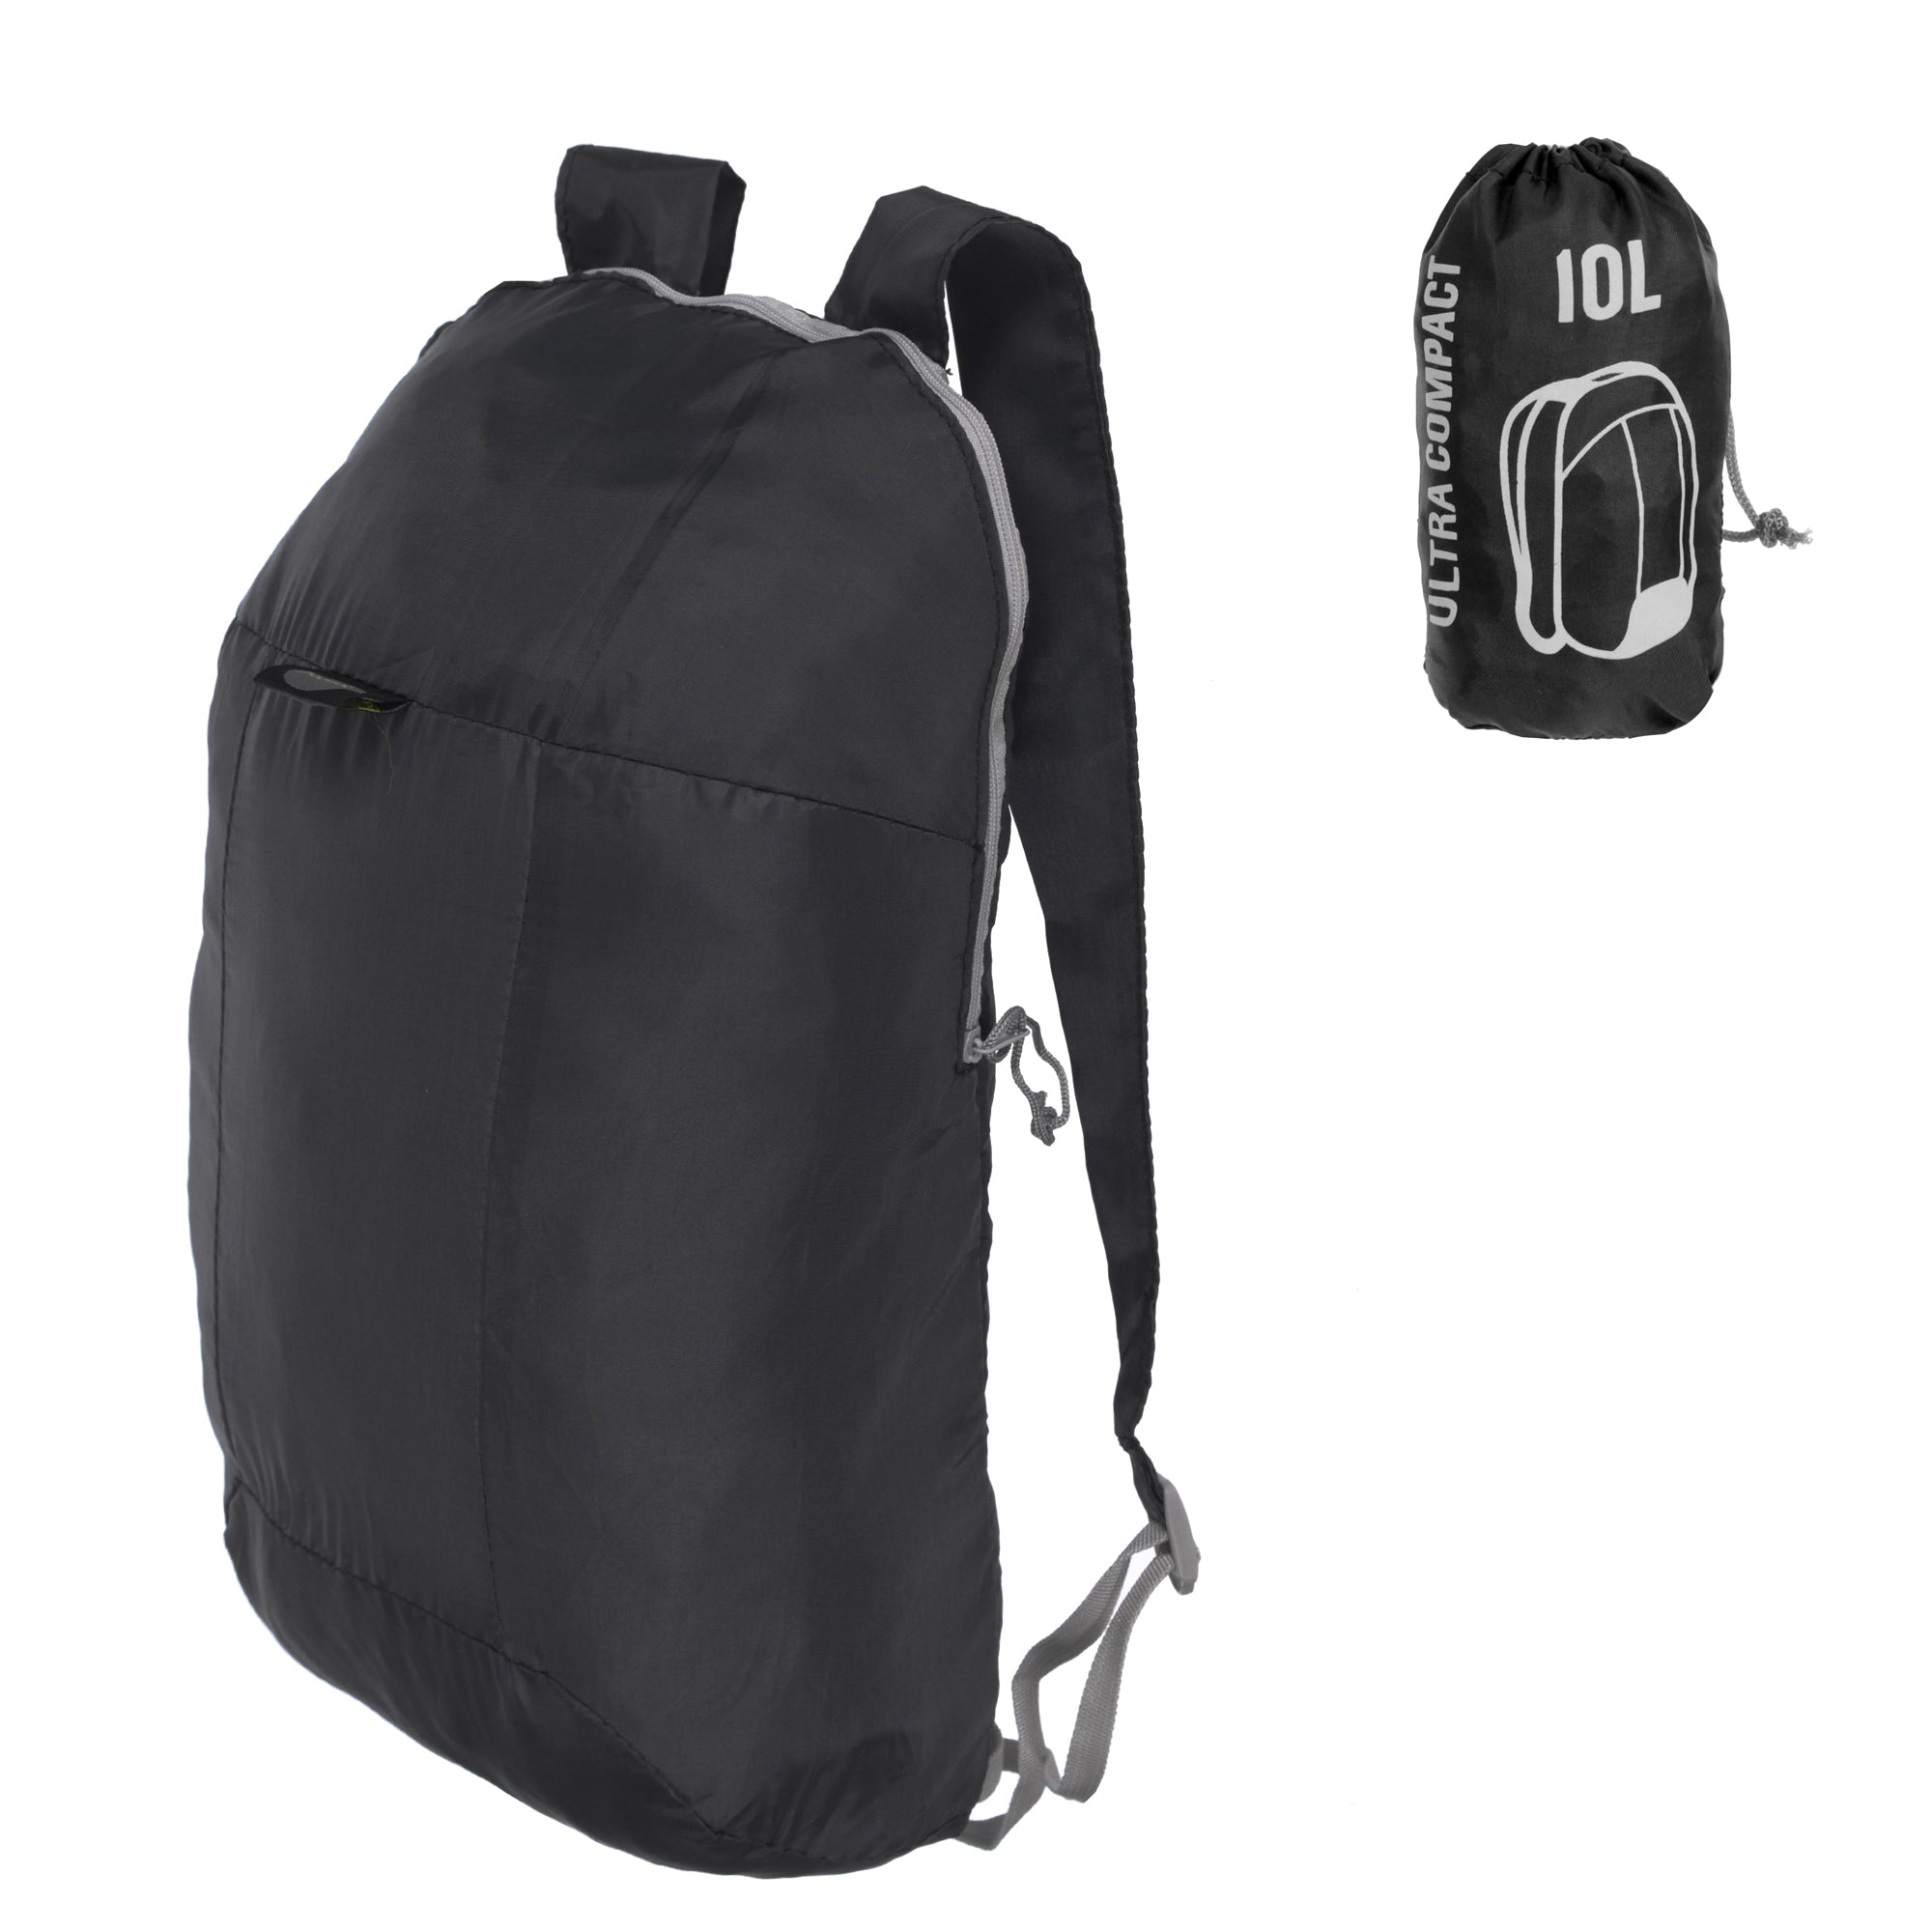 Foldable 10L Backpack